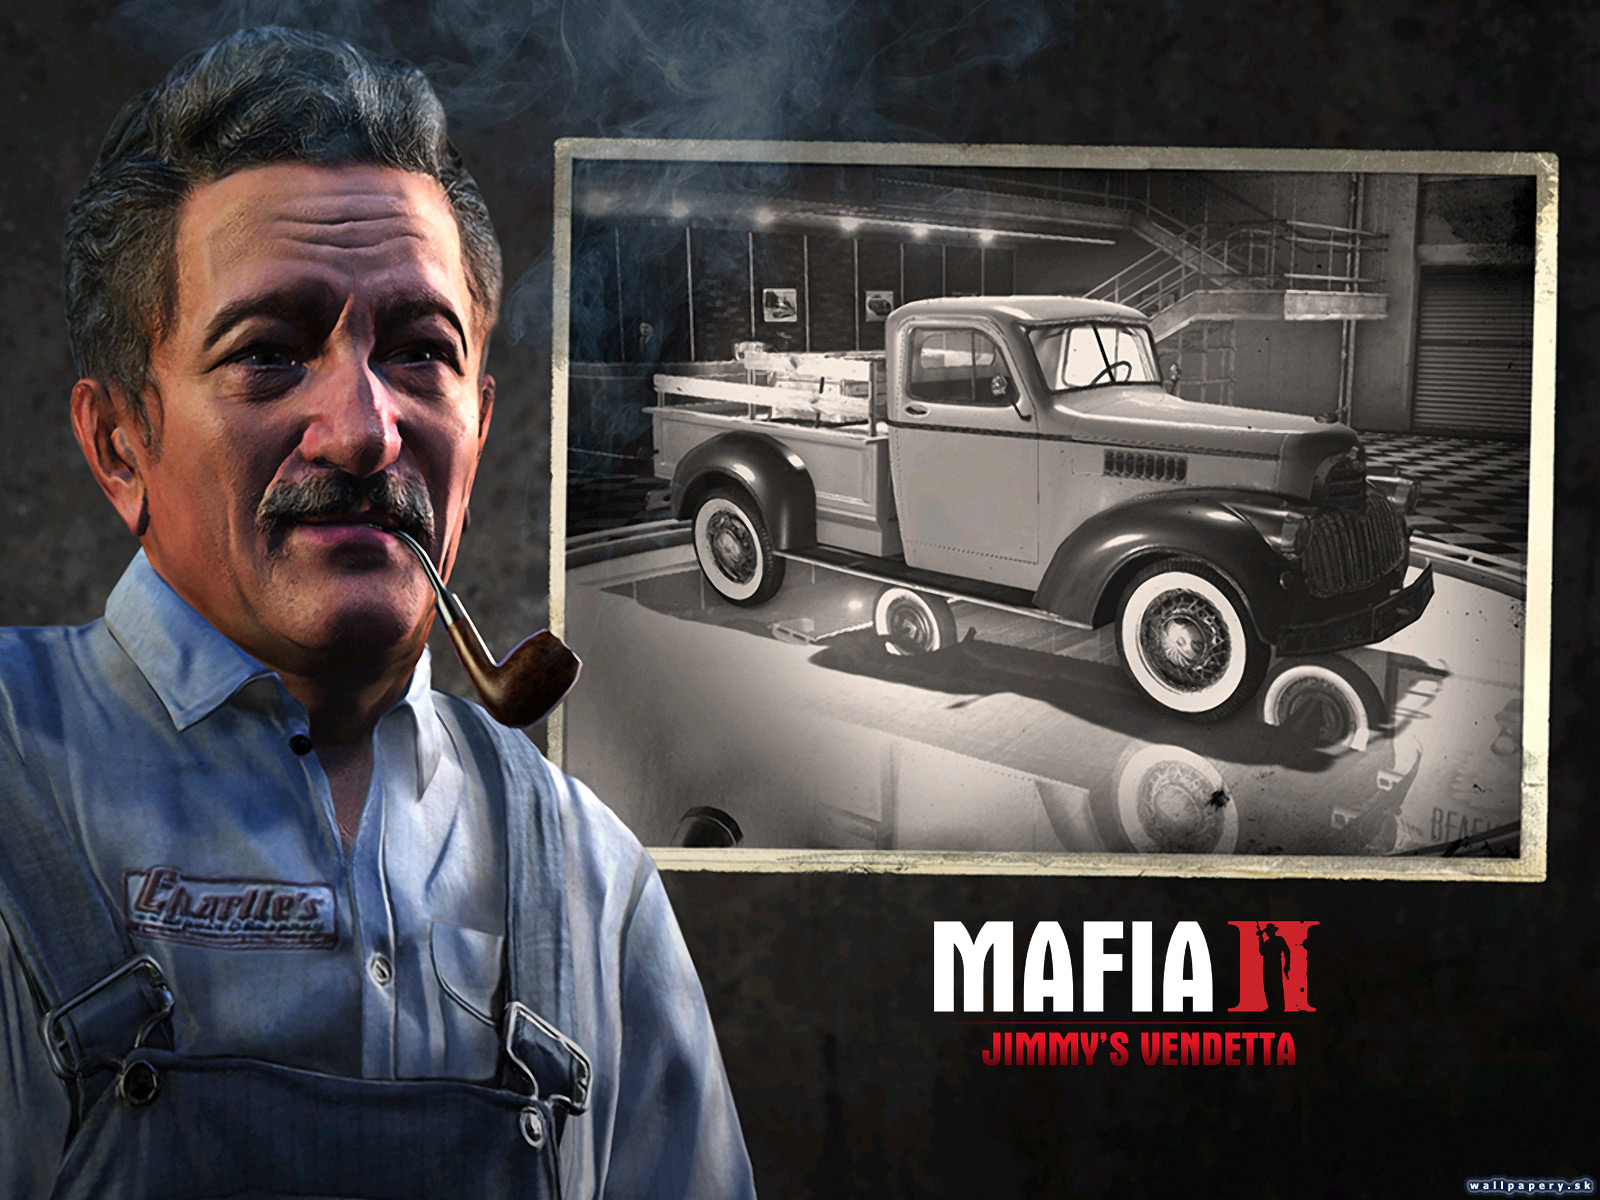 Mafia 2: Jimmy's Vendetta - wallpaper 19